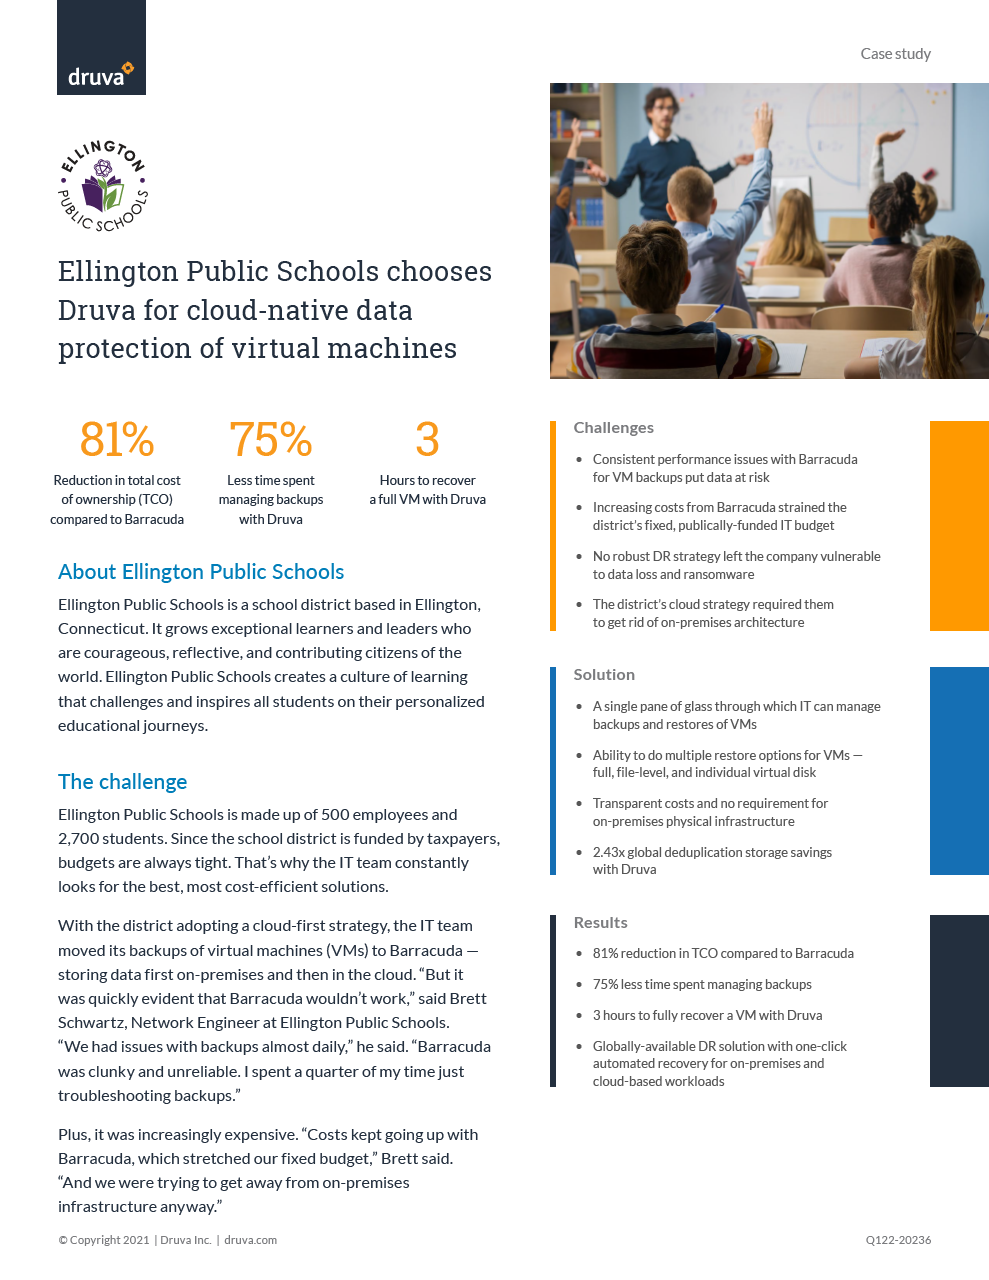 Ellington Public Schools chooses Druva for cloud-native data protection of virtual machines